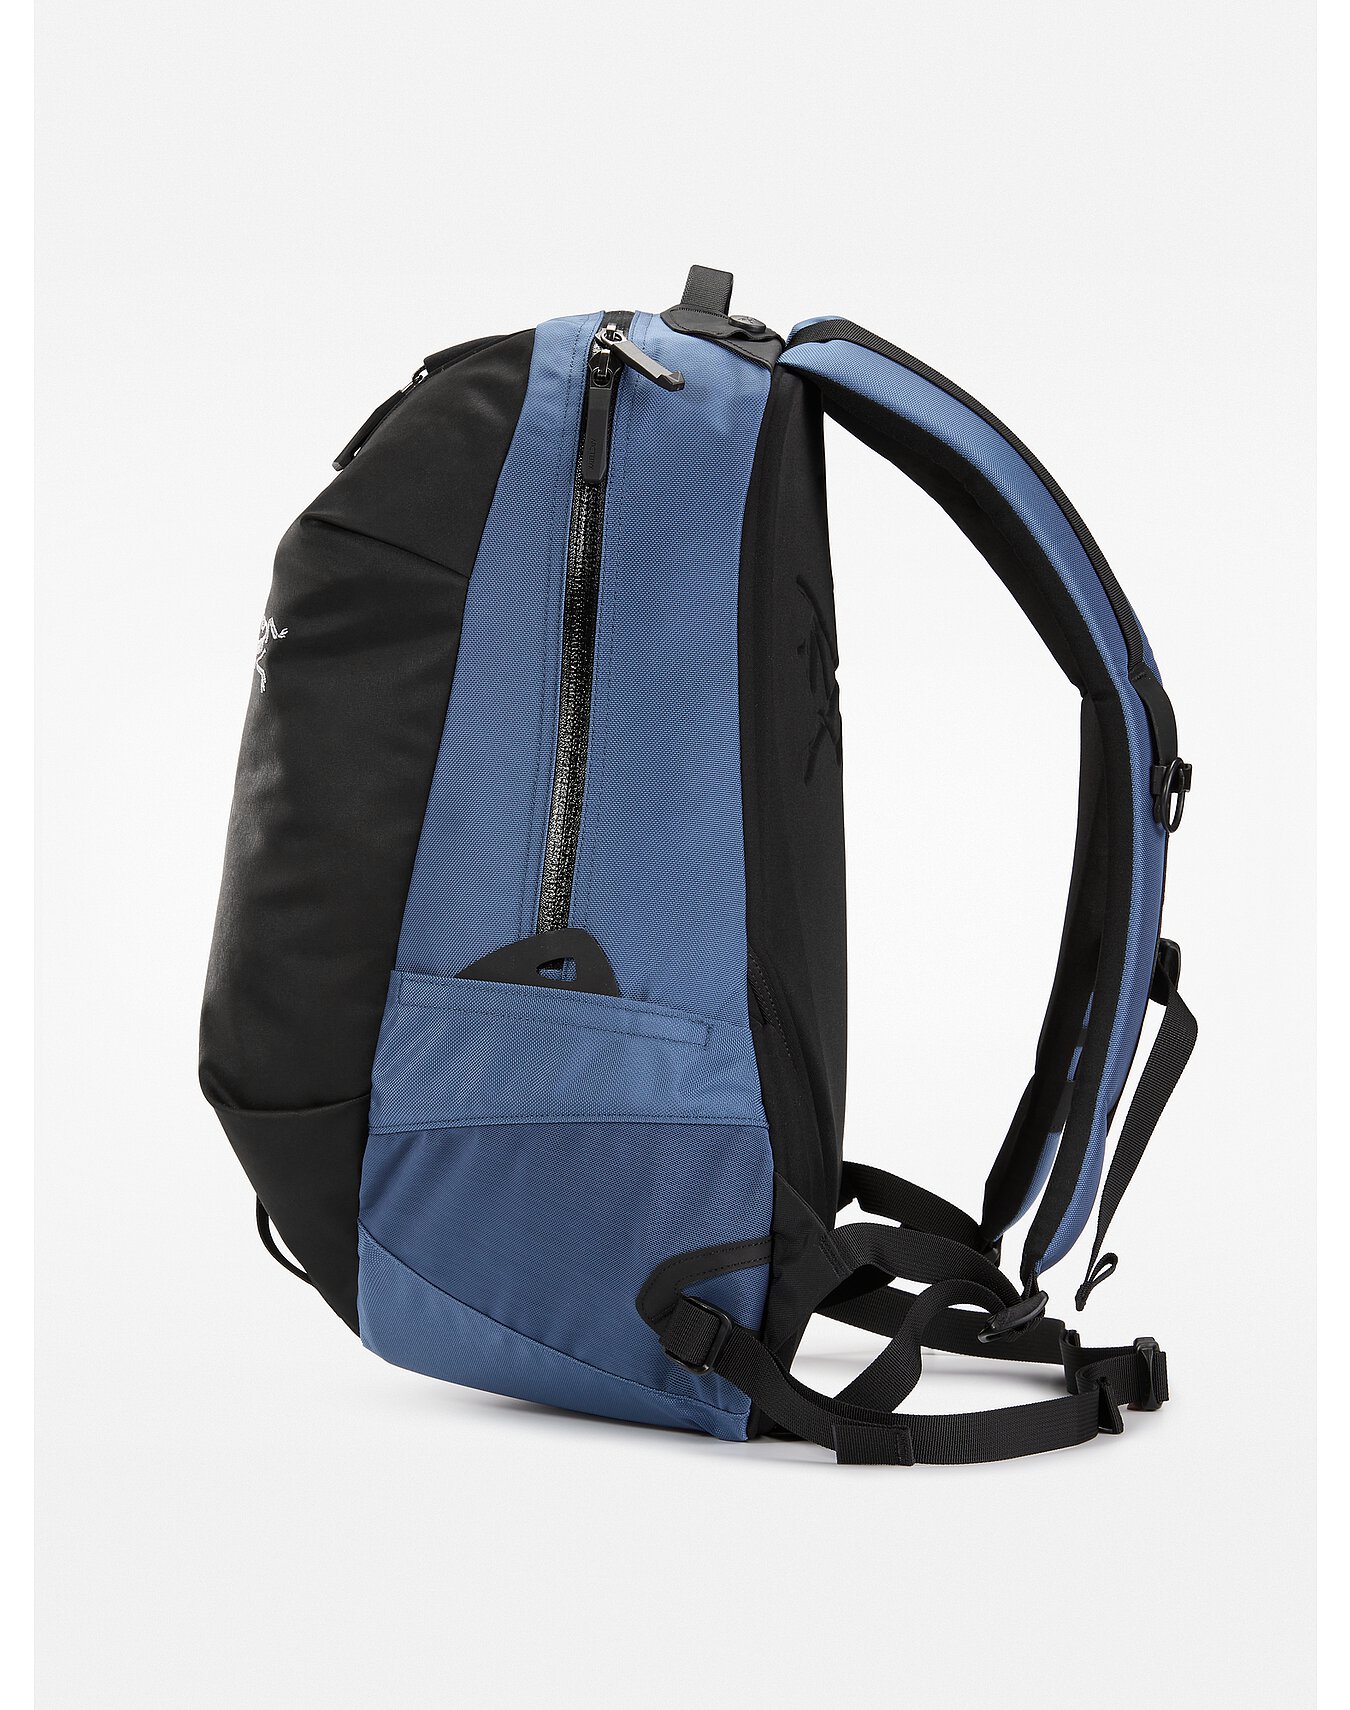 Arro 16 Backpack | Arc'teryx Outlet